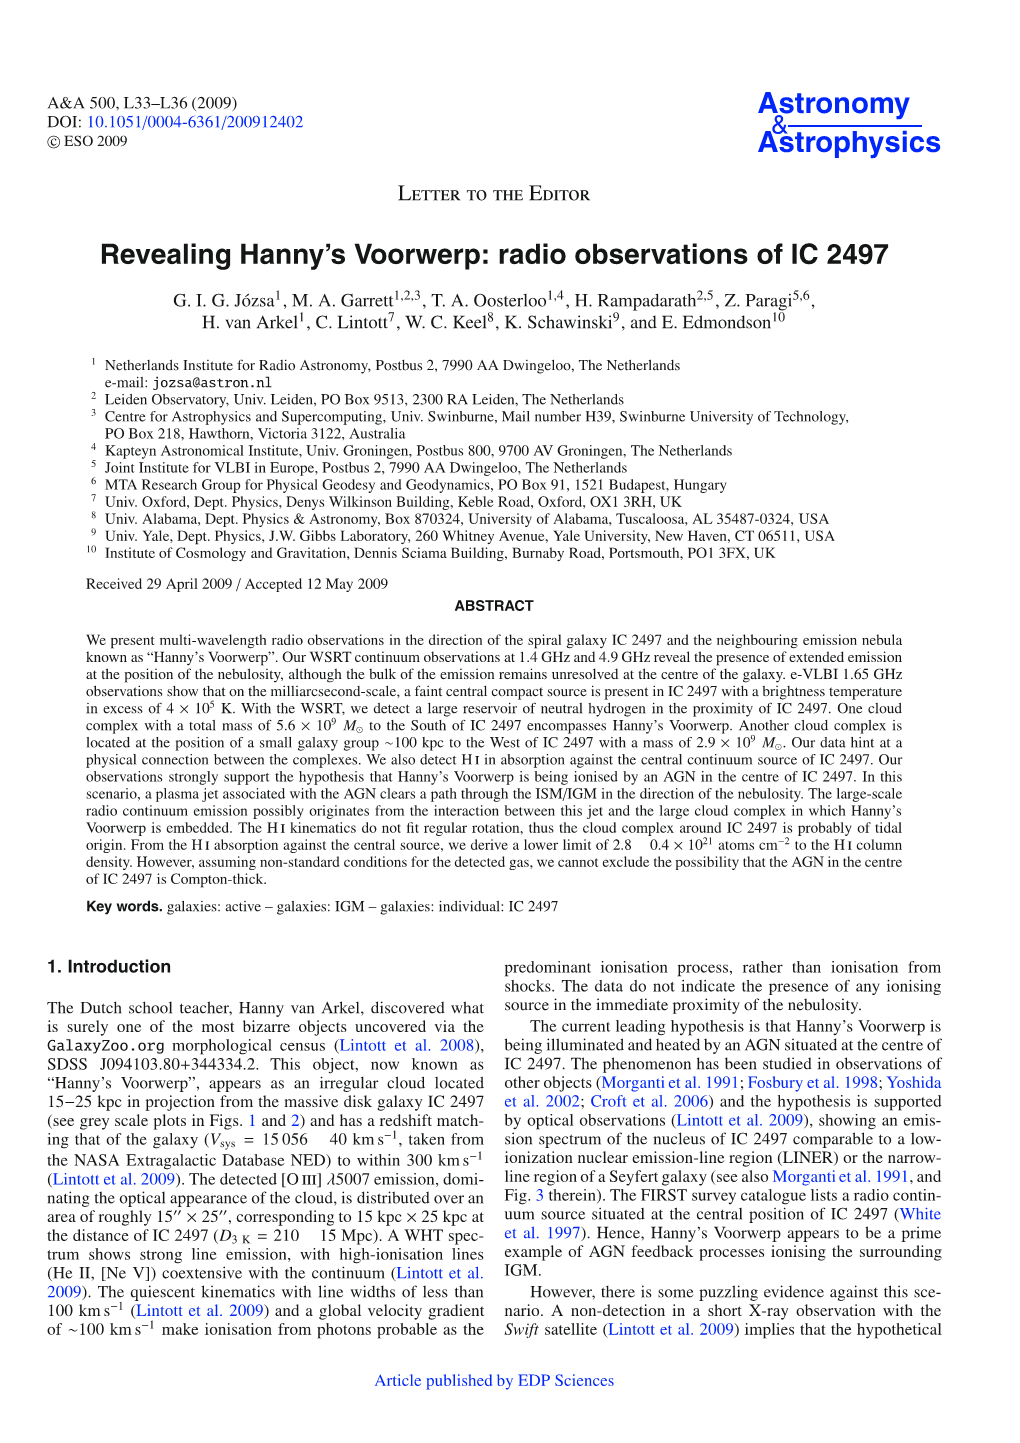 S Voorwerp: Radio Observations of IC 2497